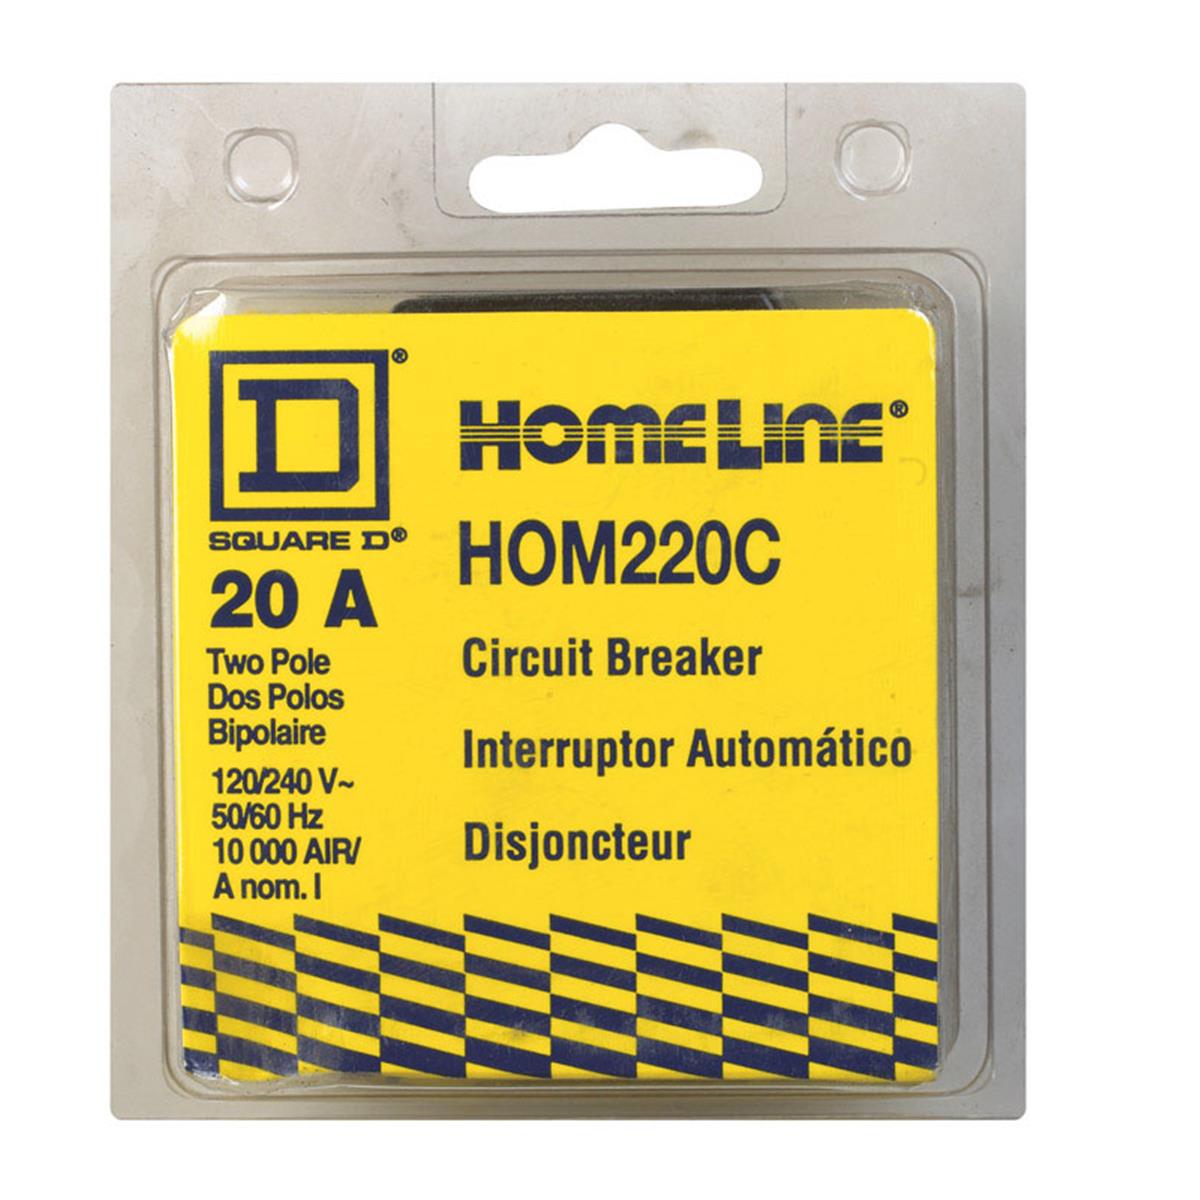 Hom220c 2 In. 20 A, 2-pole Homeline Circuit Breaker